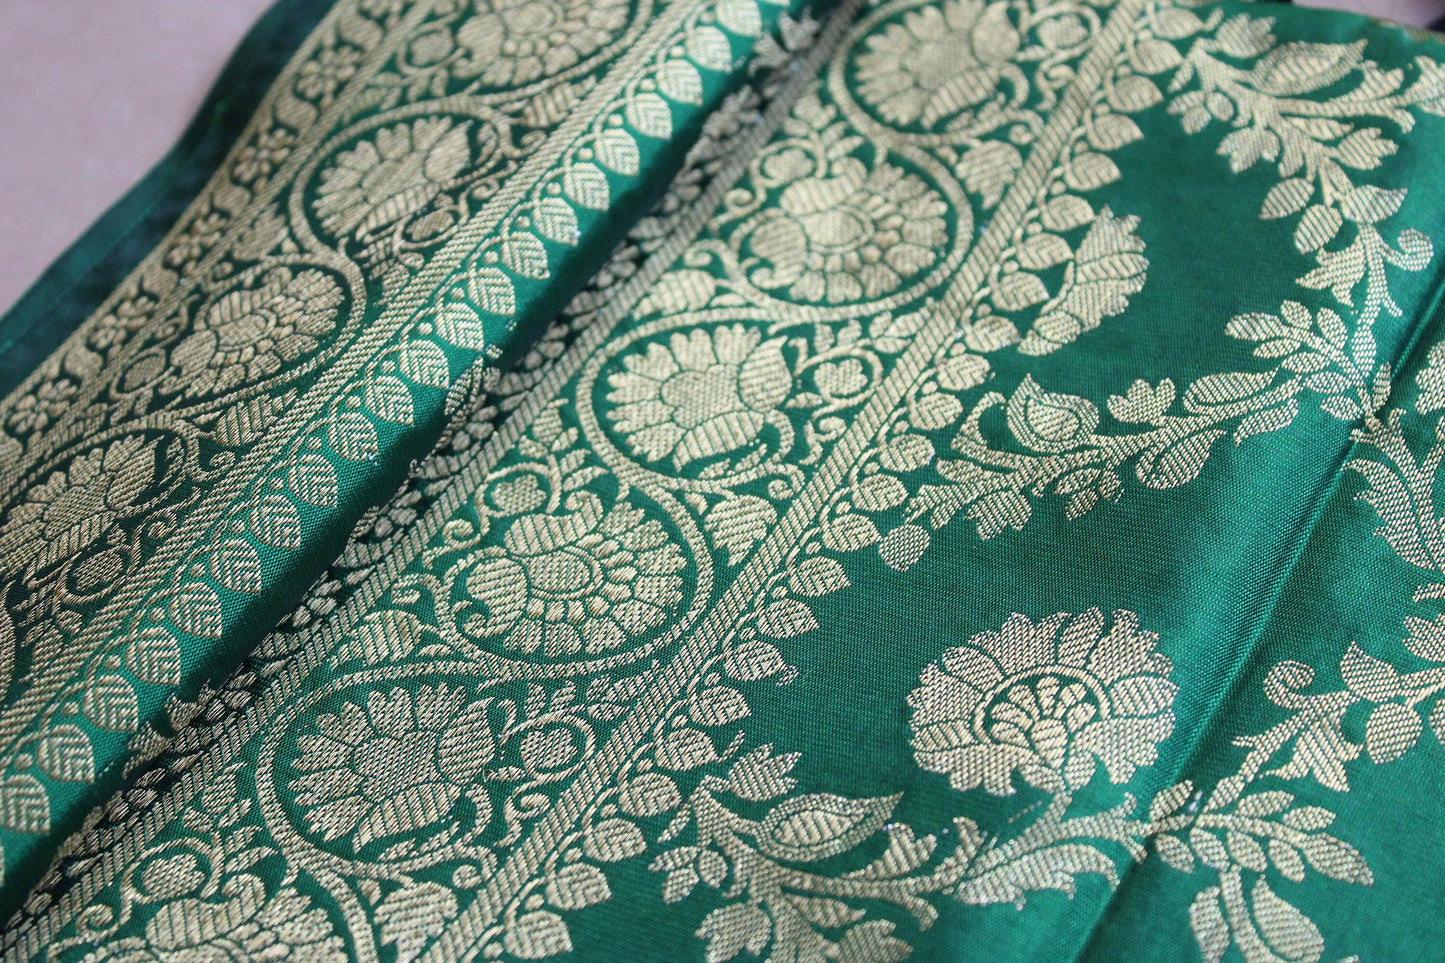 Banarasi Emerald Green Dupatta with gold handweaving, Indian traditional and Festive designer dupatta, luxurious, soft to touch  dupatta